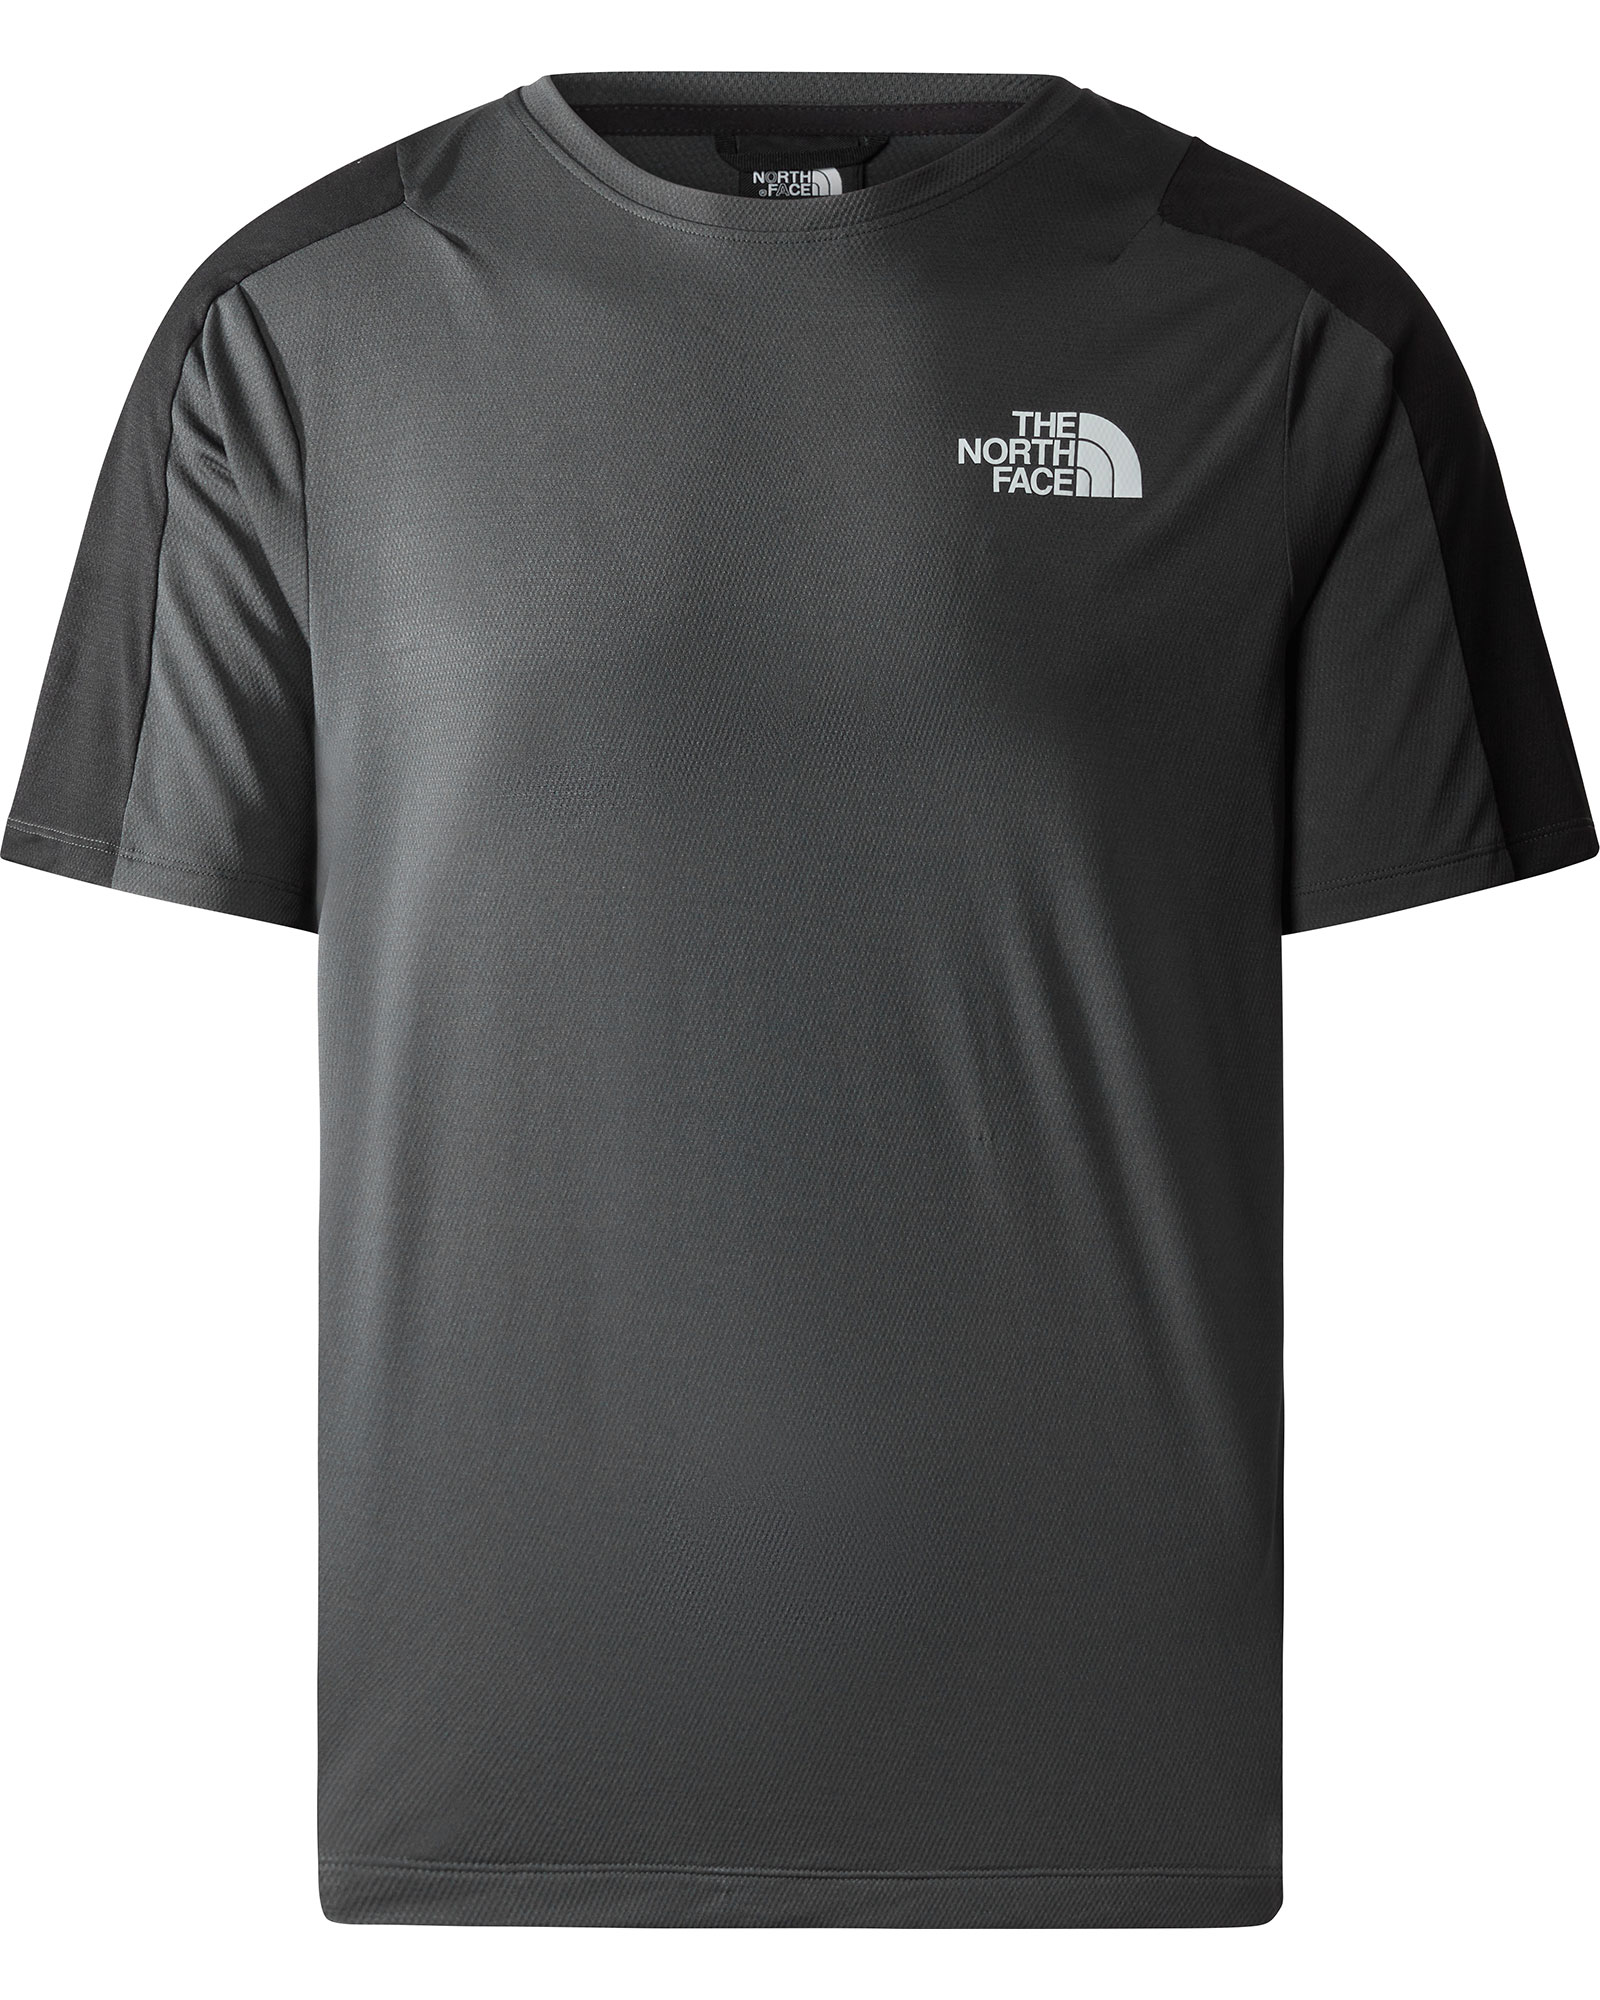 The North Face Men’s MA T Shirt - Asphalt Grey-TNF Black M